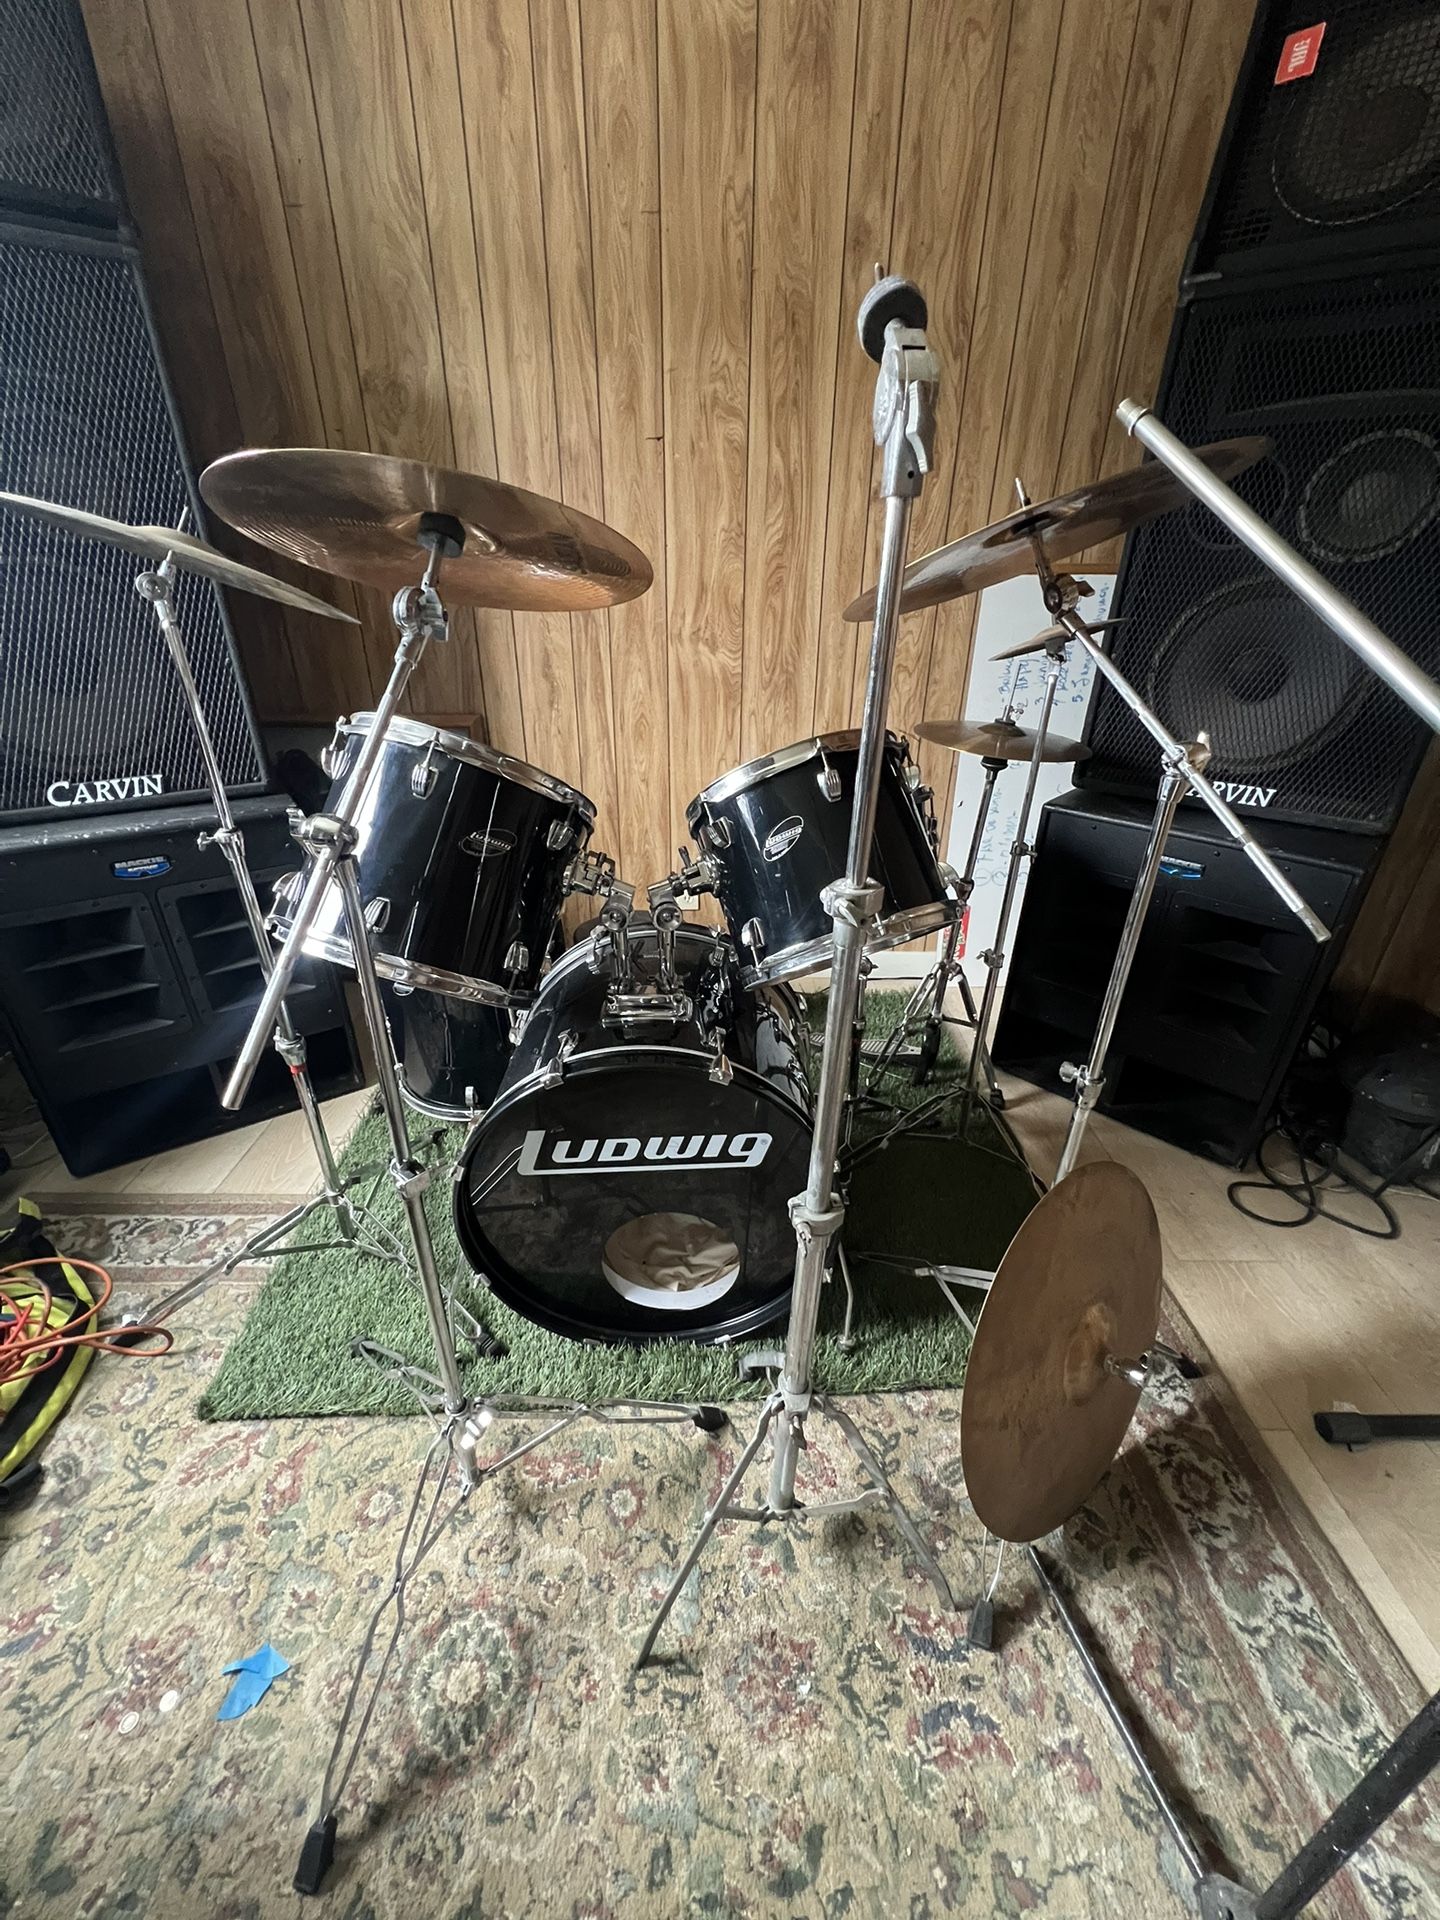 Ludwig Drum Set 